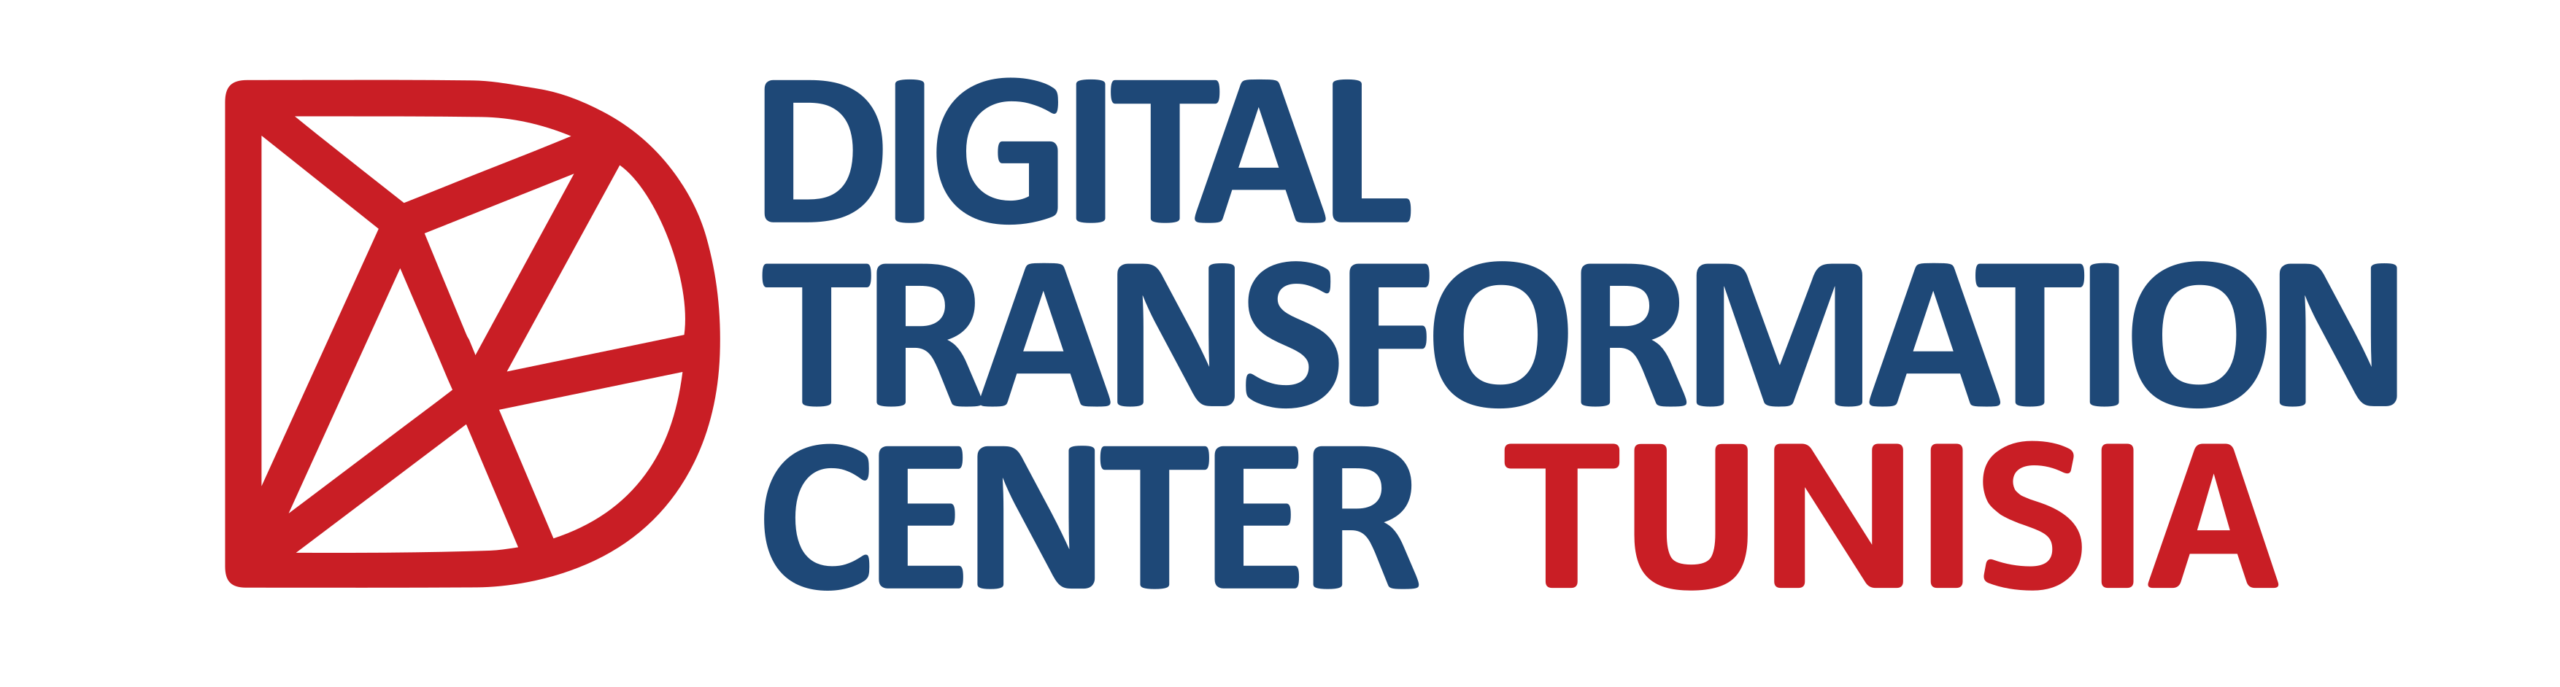 Digital-transformation-Center-Tunisia